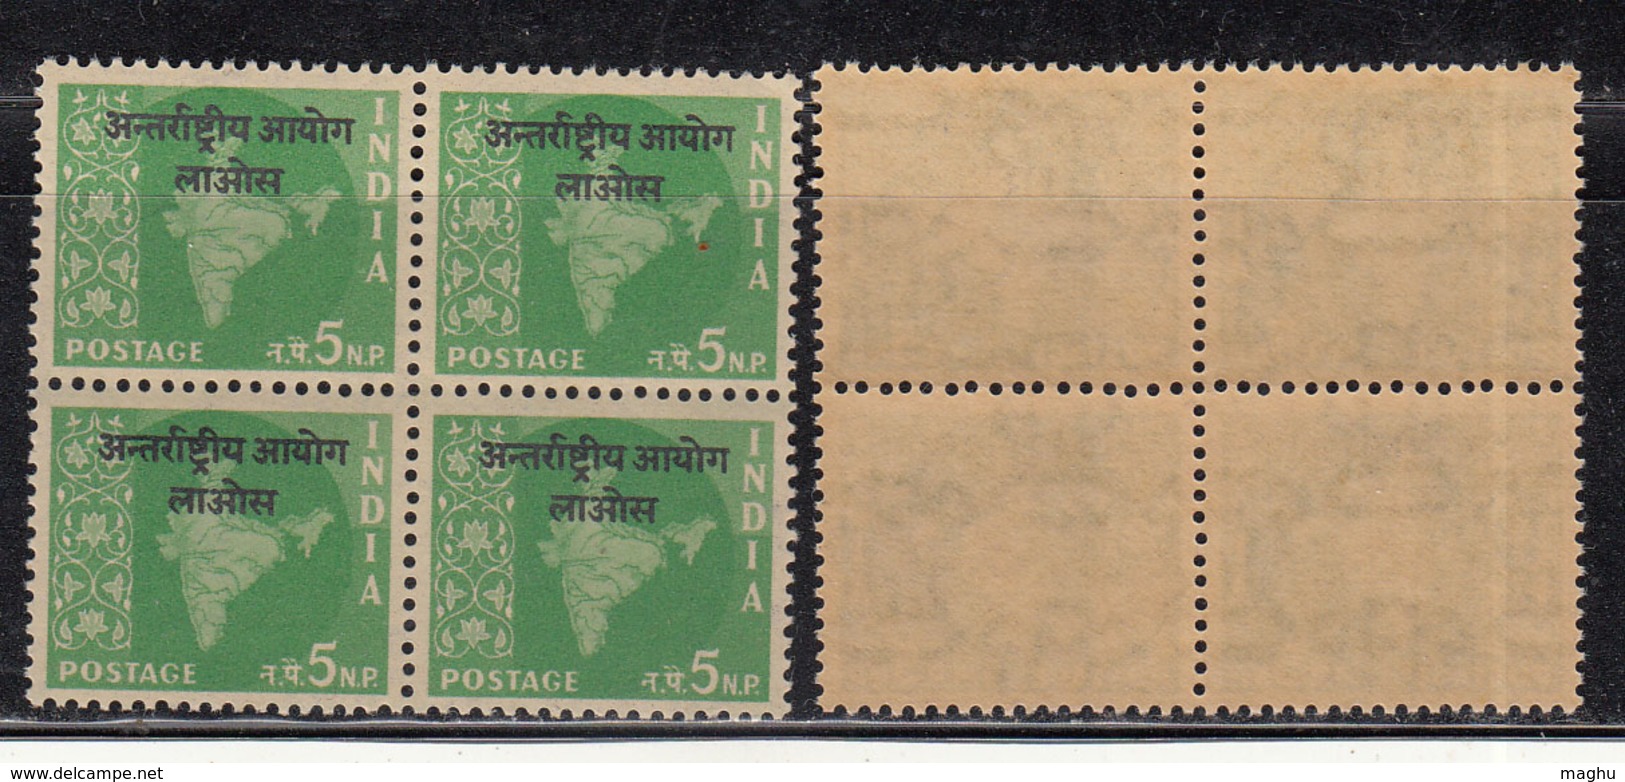 Block Of 4, 5np Ovpt Laos On Map Series,  India MNH 1962, Ashokan Watermark, - Militaire Vrijstelling Van Portkosten